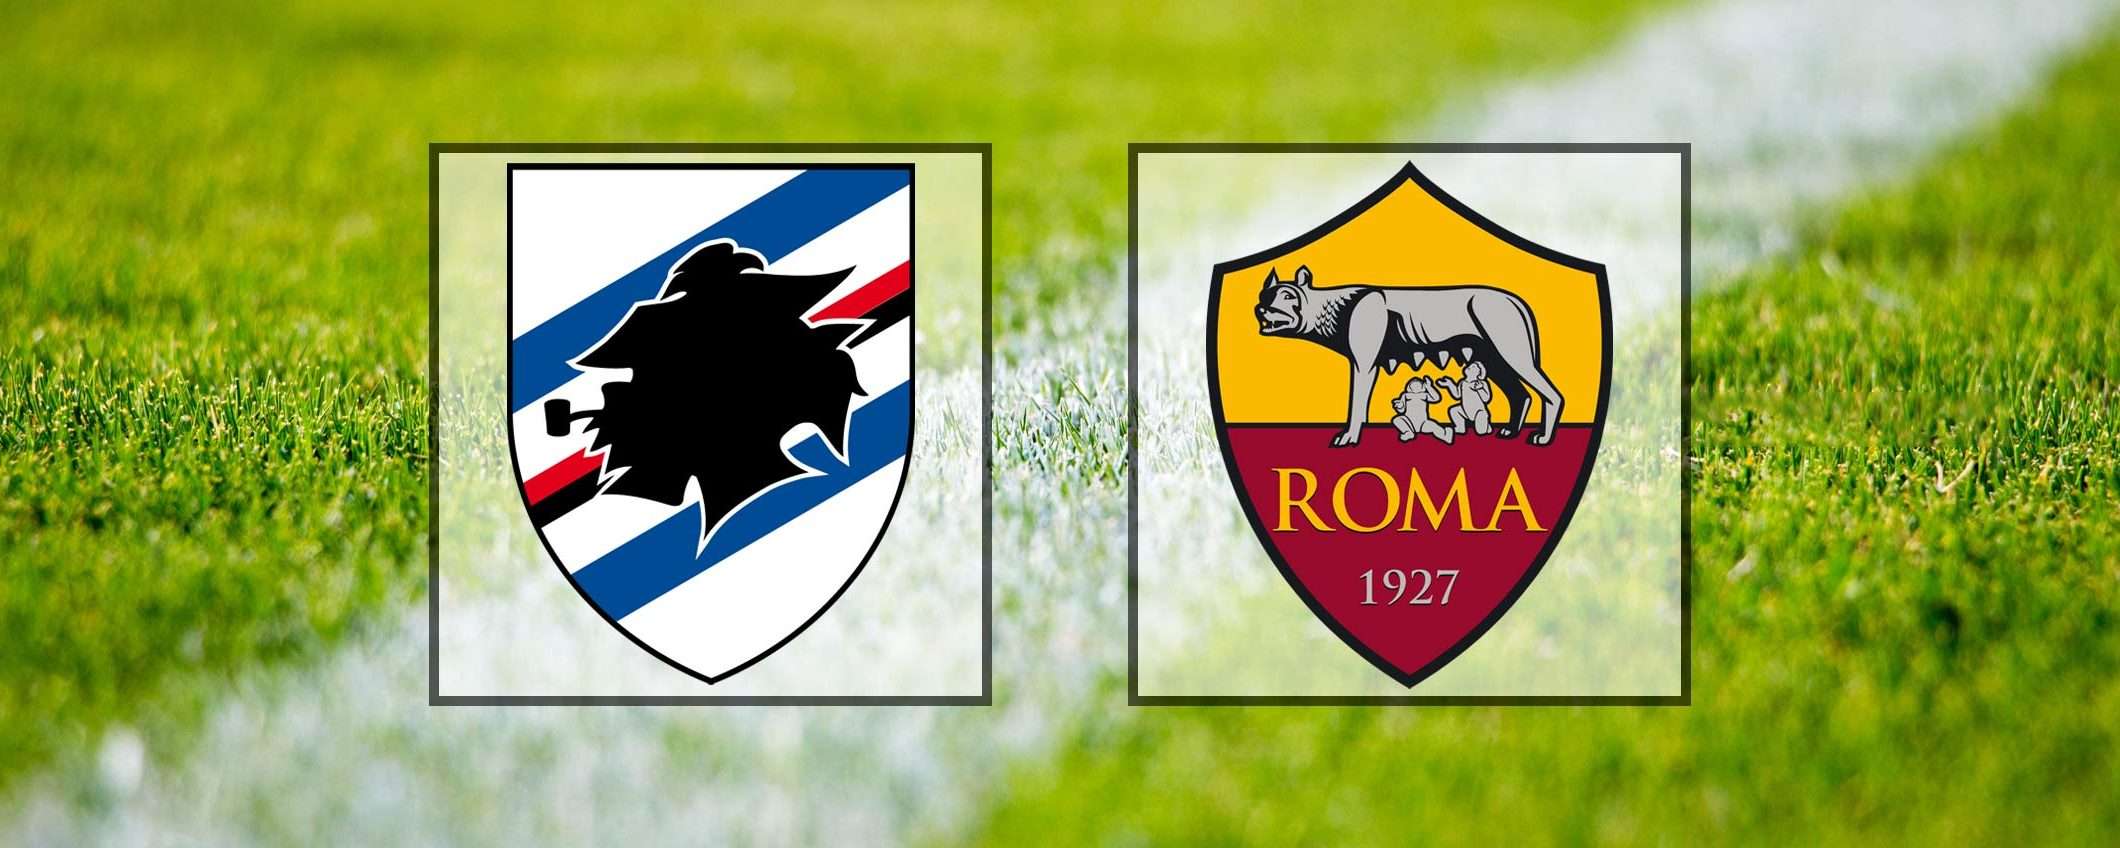 Come vedere Sampdoria-Roma in streaming (Serie A)